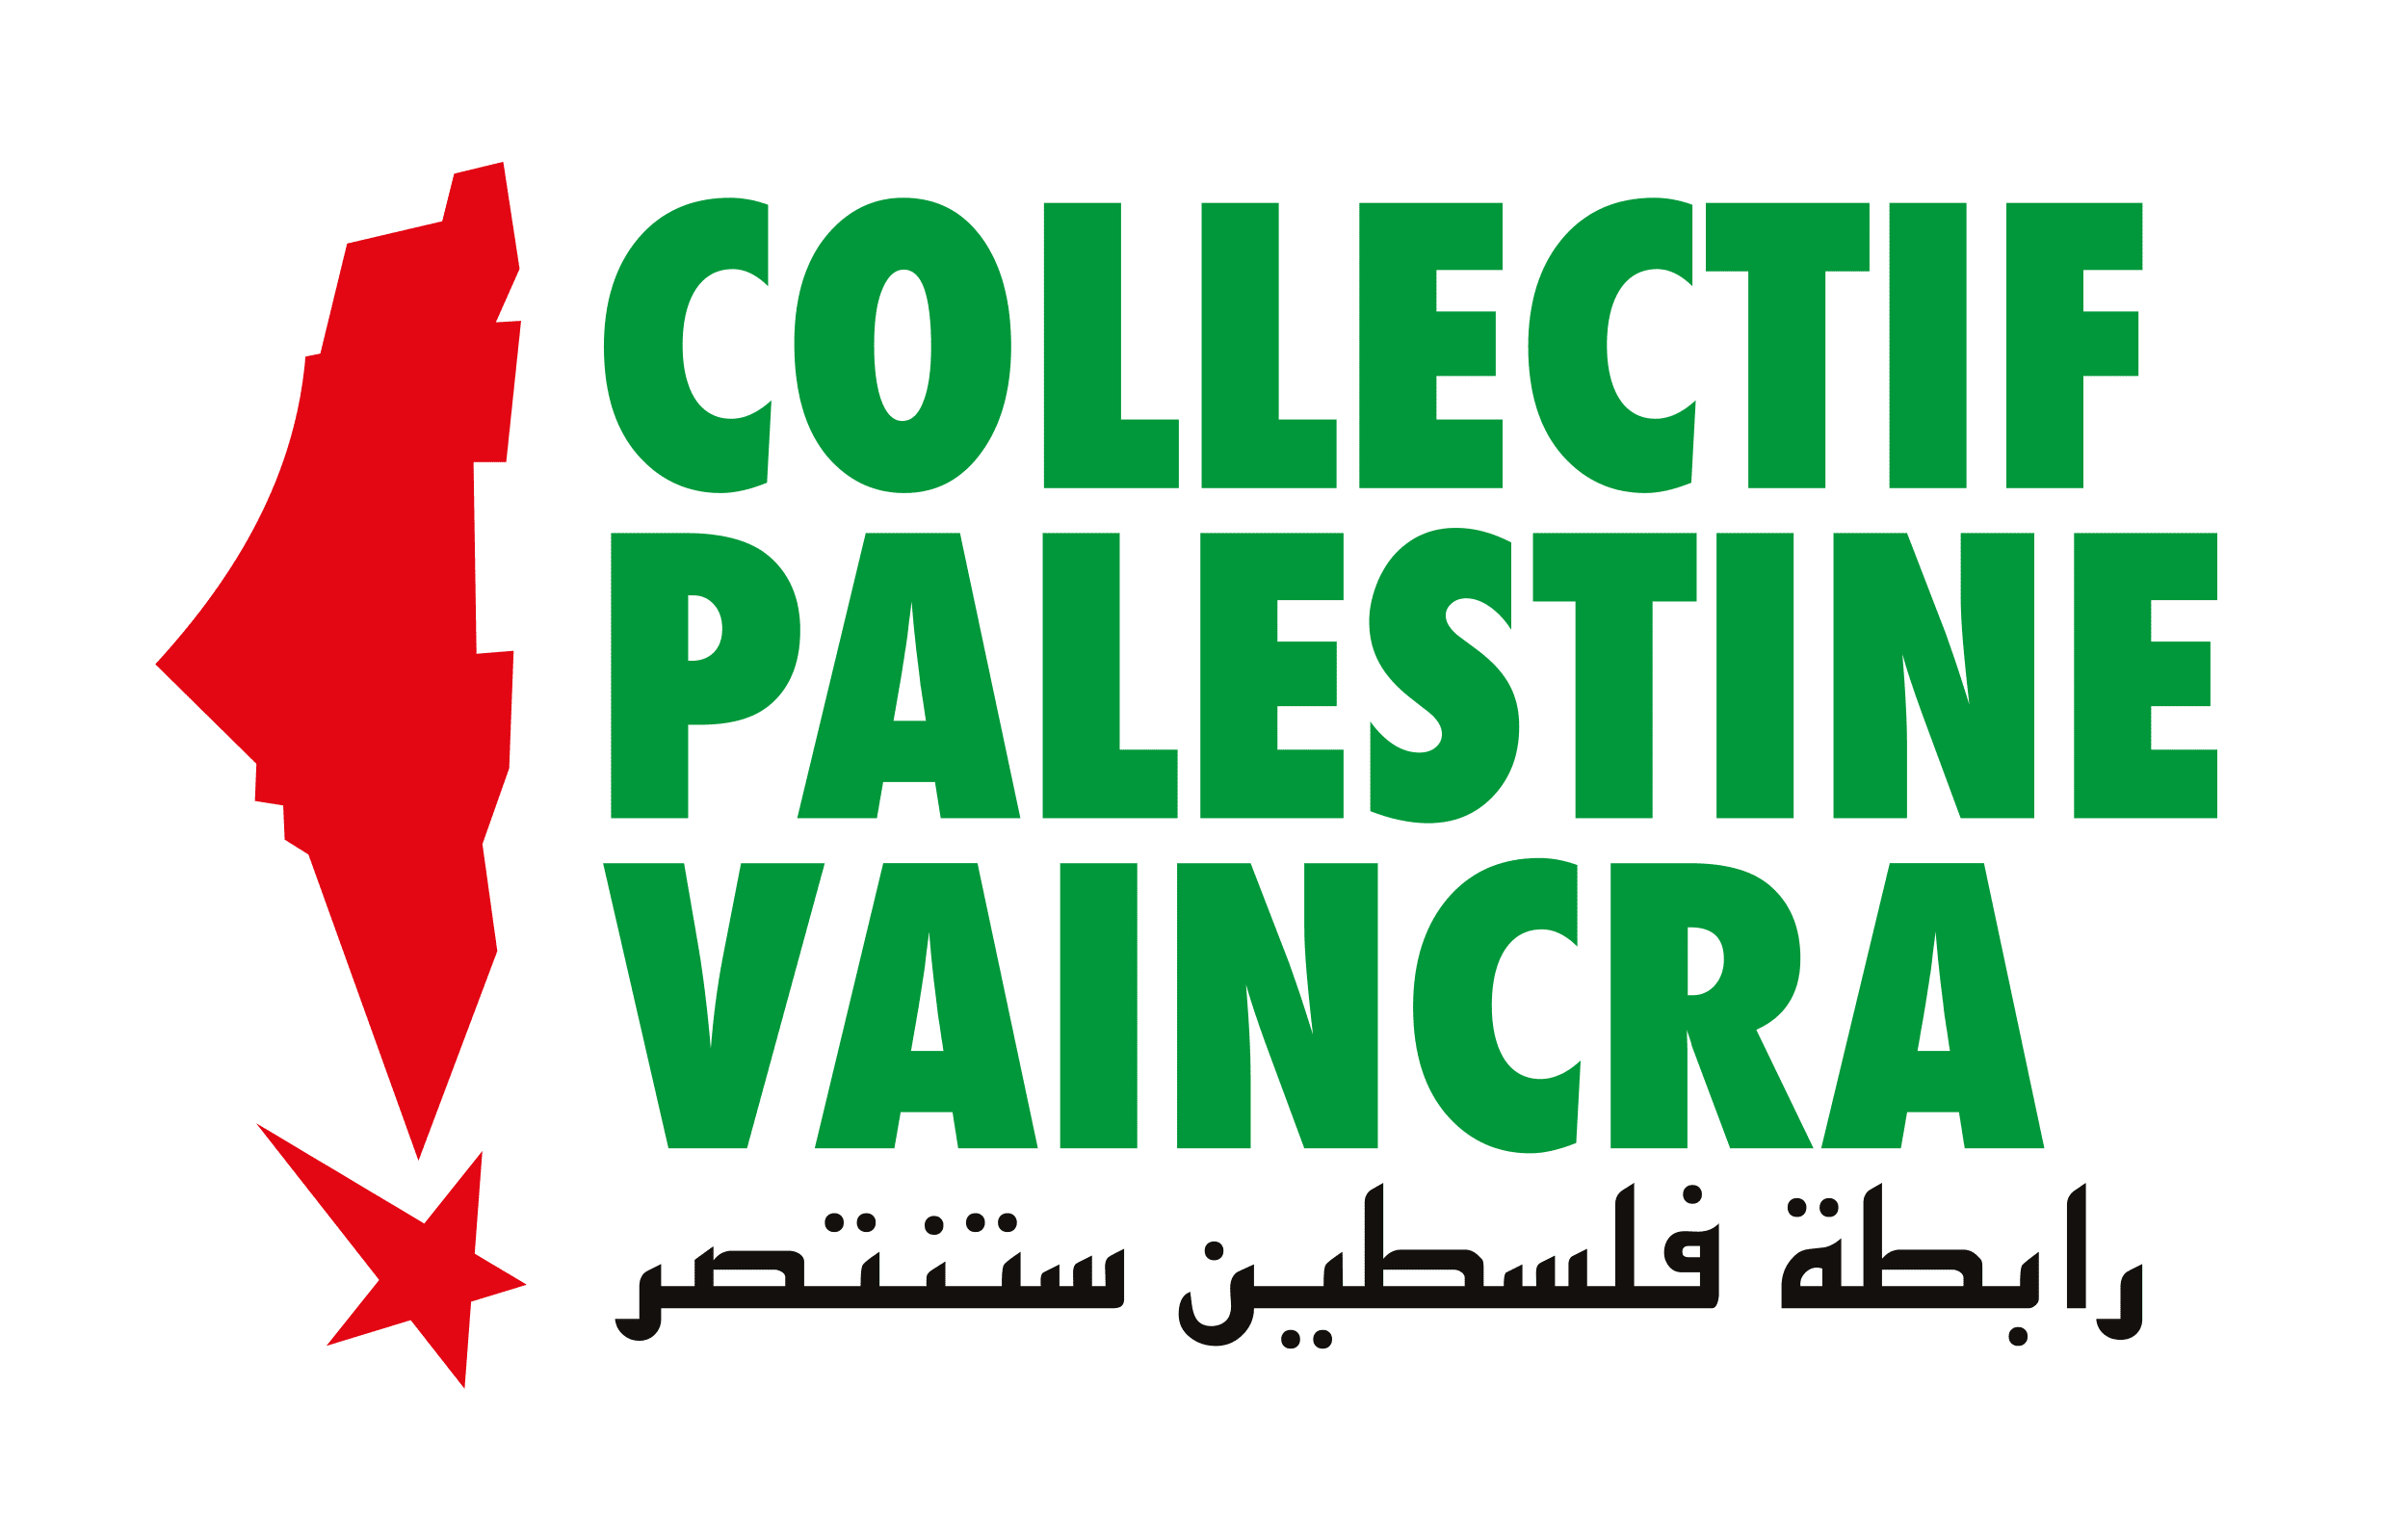 Collectif Palestine vaincra